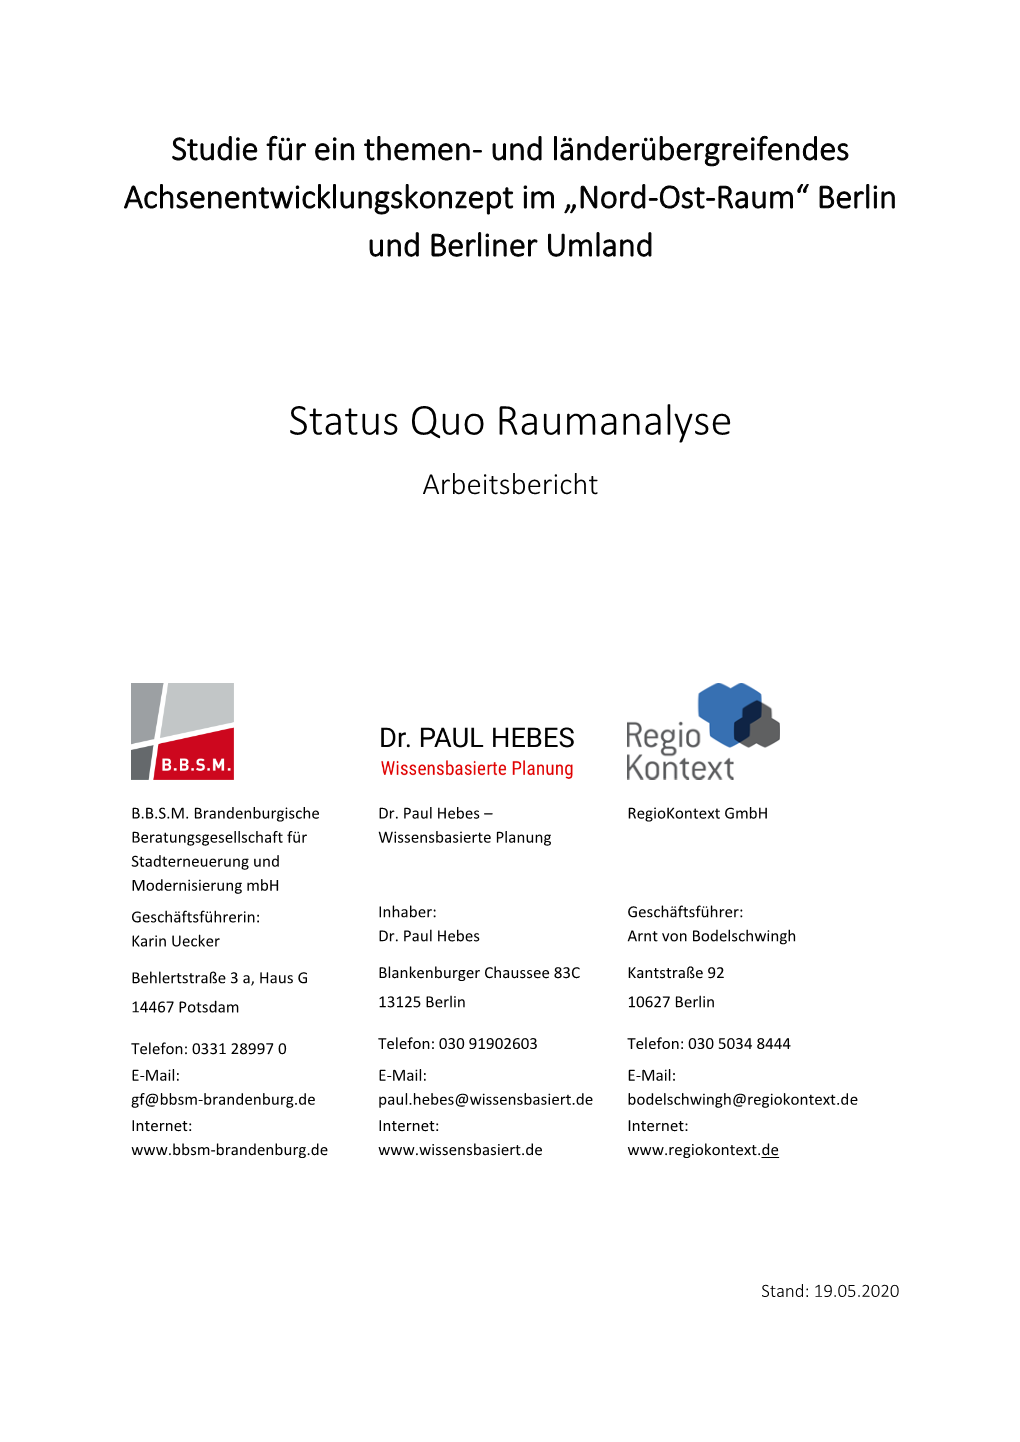 Status Quo Raumanalyse Arbeitsbericht